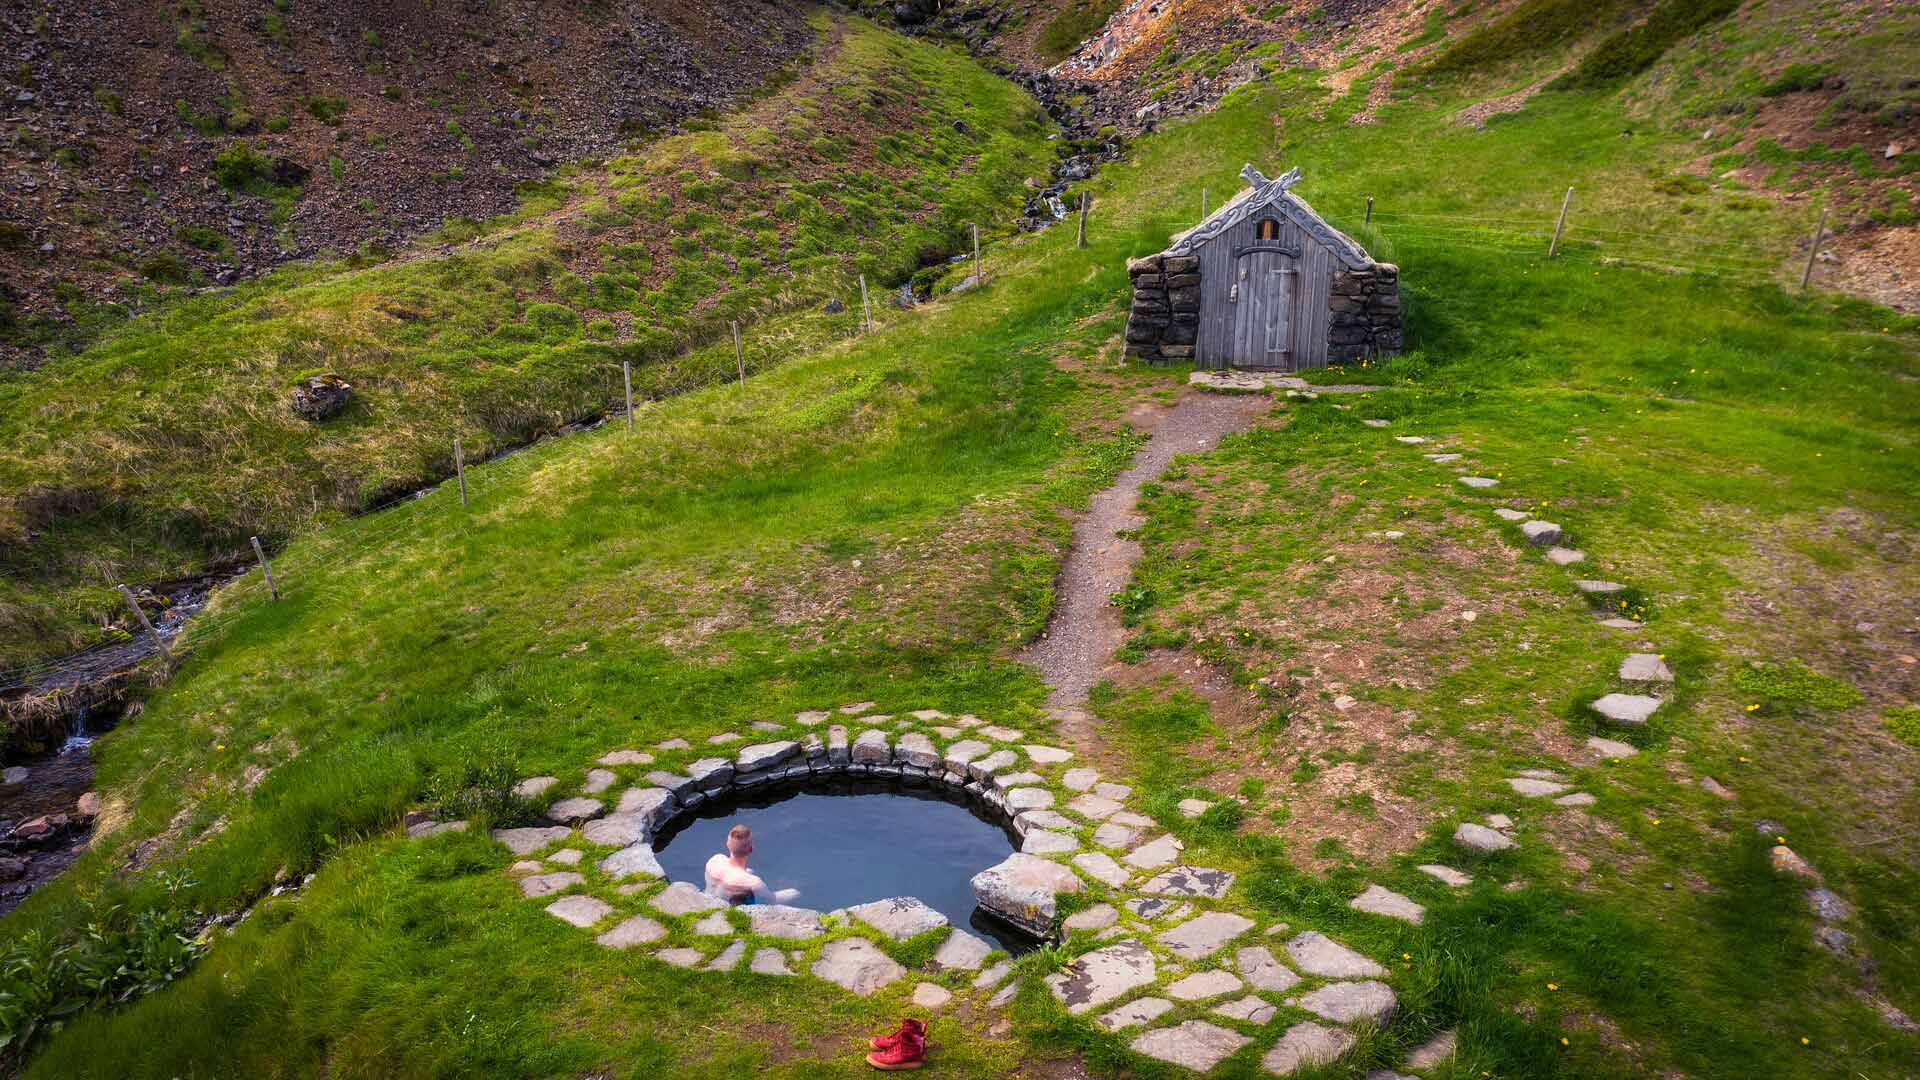 Gudrunarlaug hot spring in Iceland